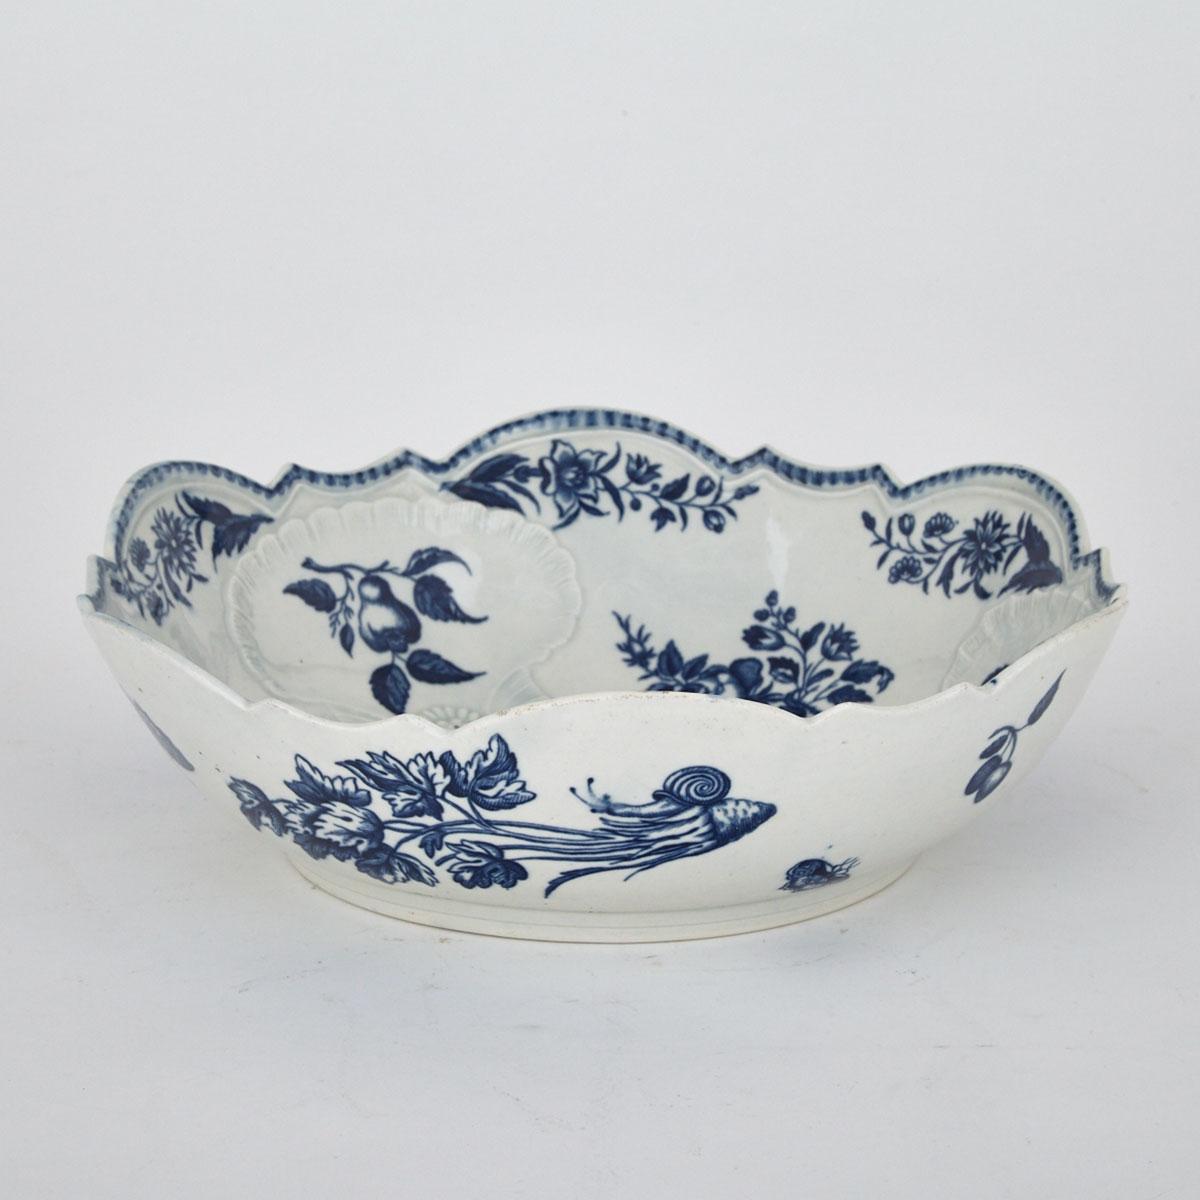 Worcester ‘Pine Cone’ Salad Bowl, c.1775-85